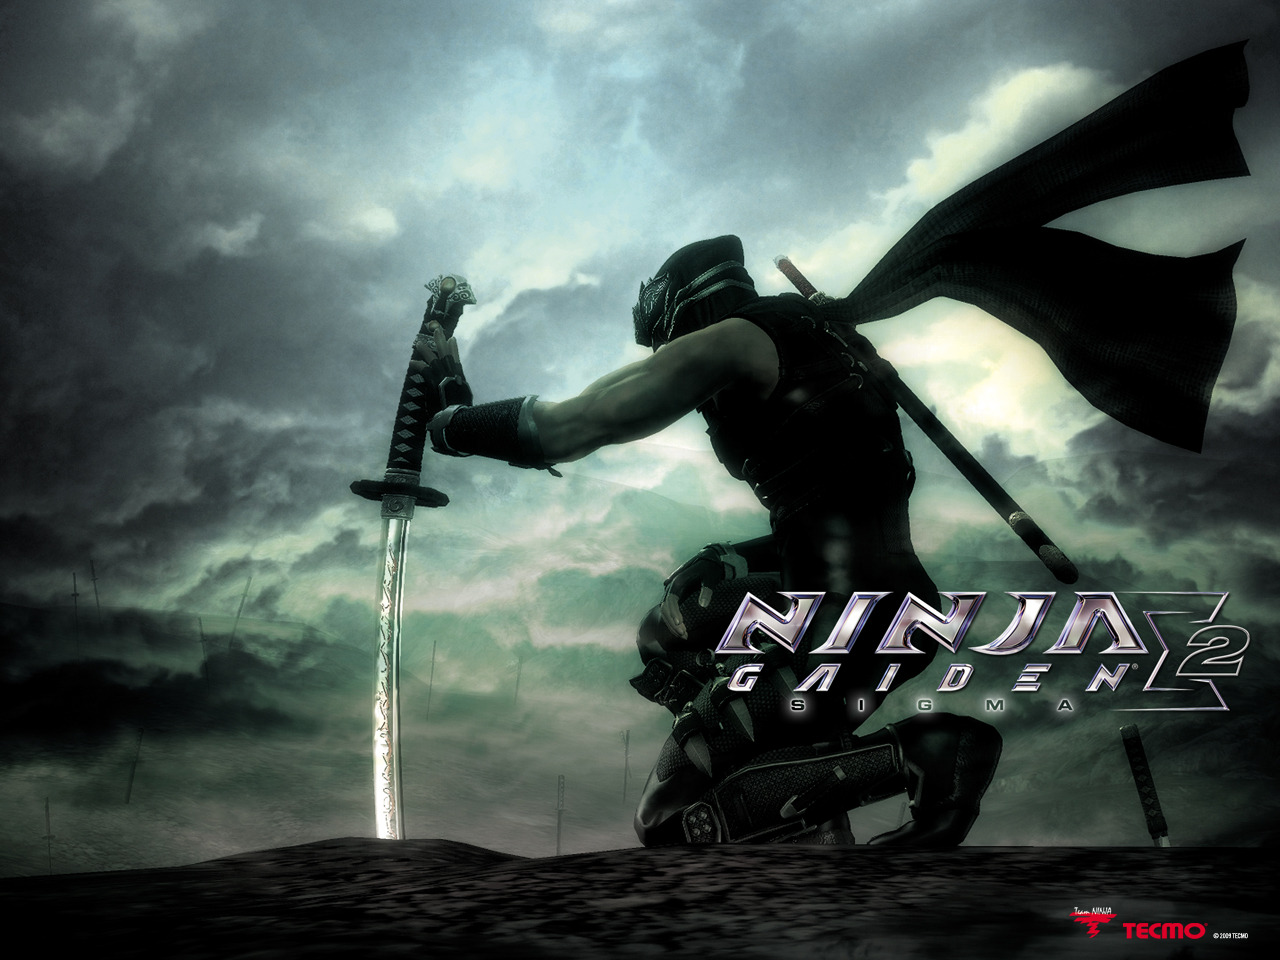 fond d’ecran ninja